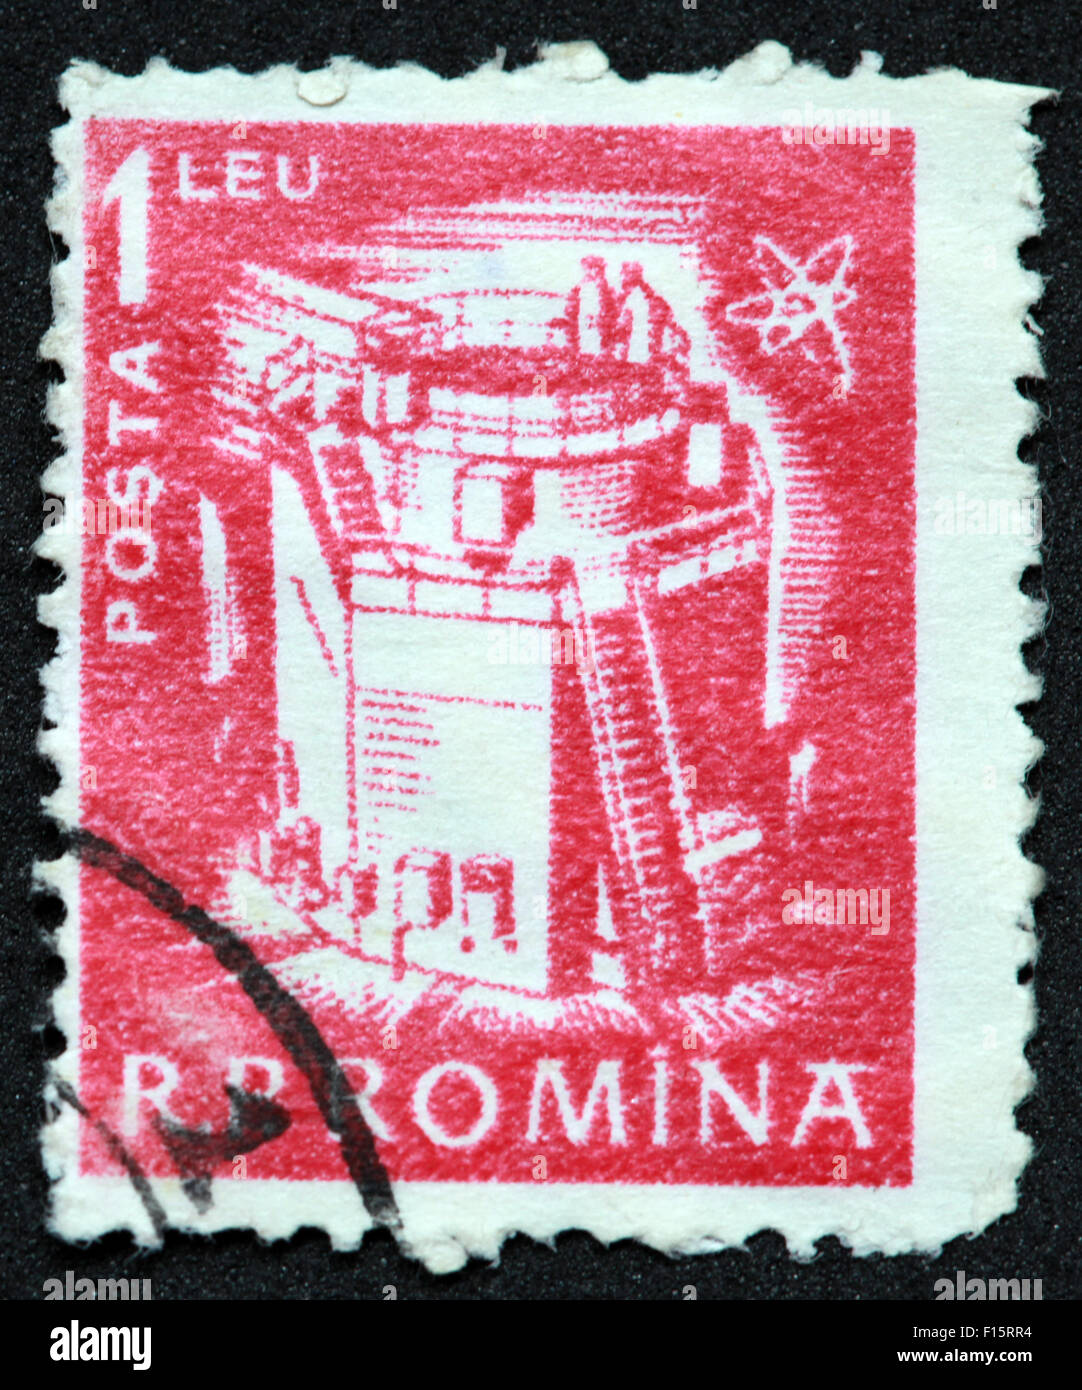 RP Romina 1leu Posta timbre rouge Banque D'Images